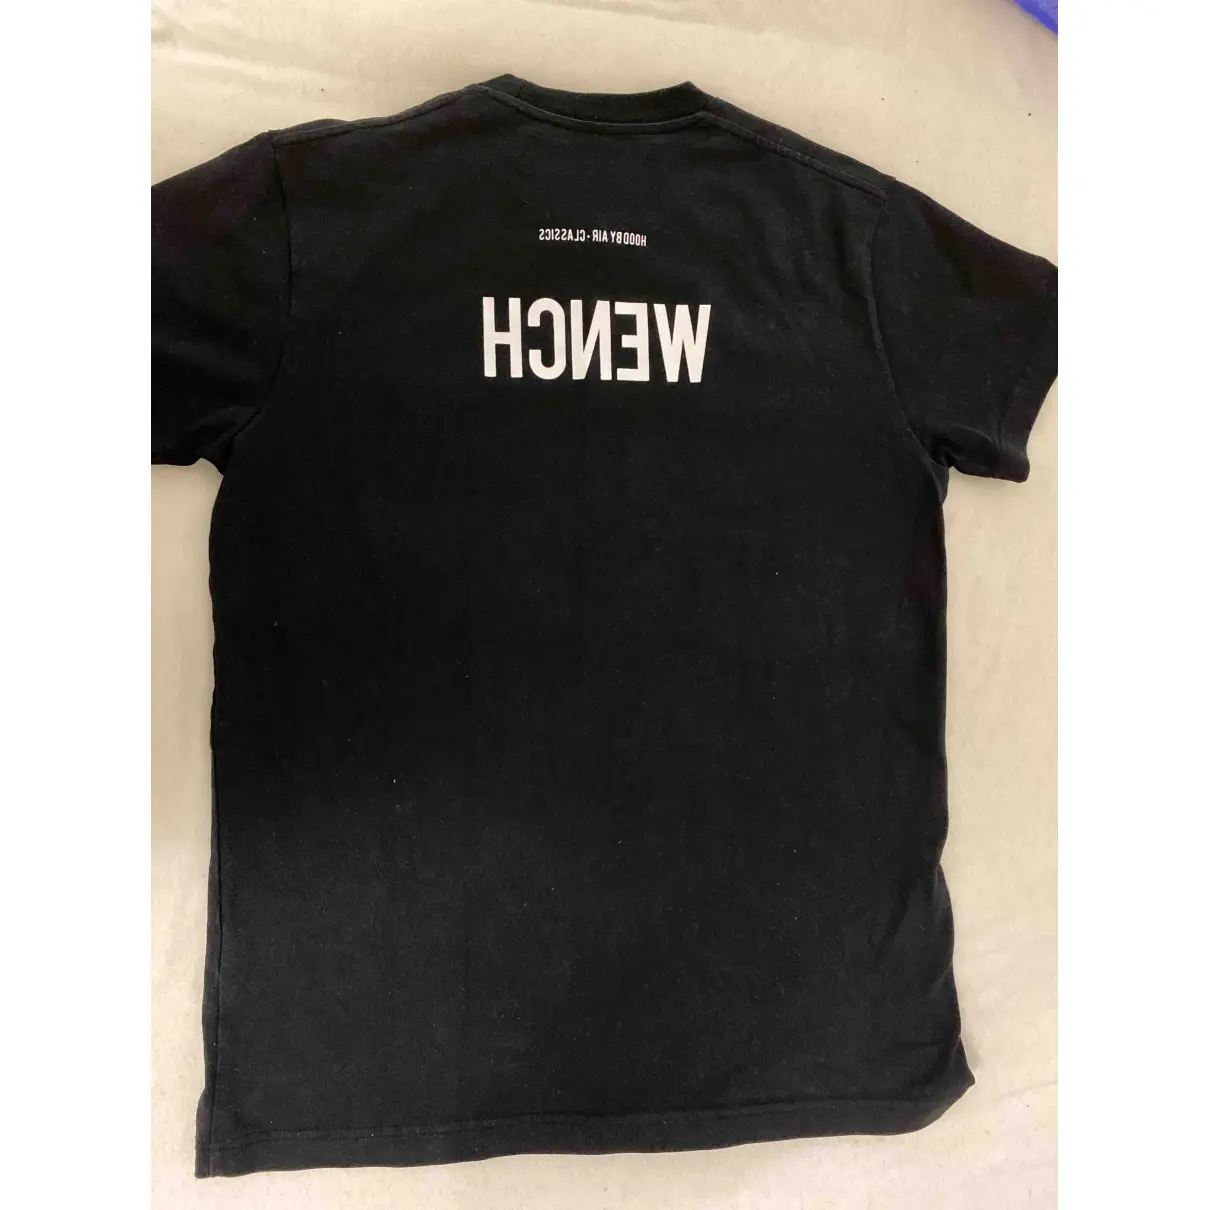 Buy Hood by Air Black Cotton T-shirt online